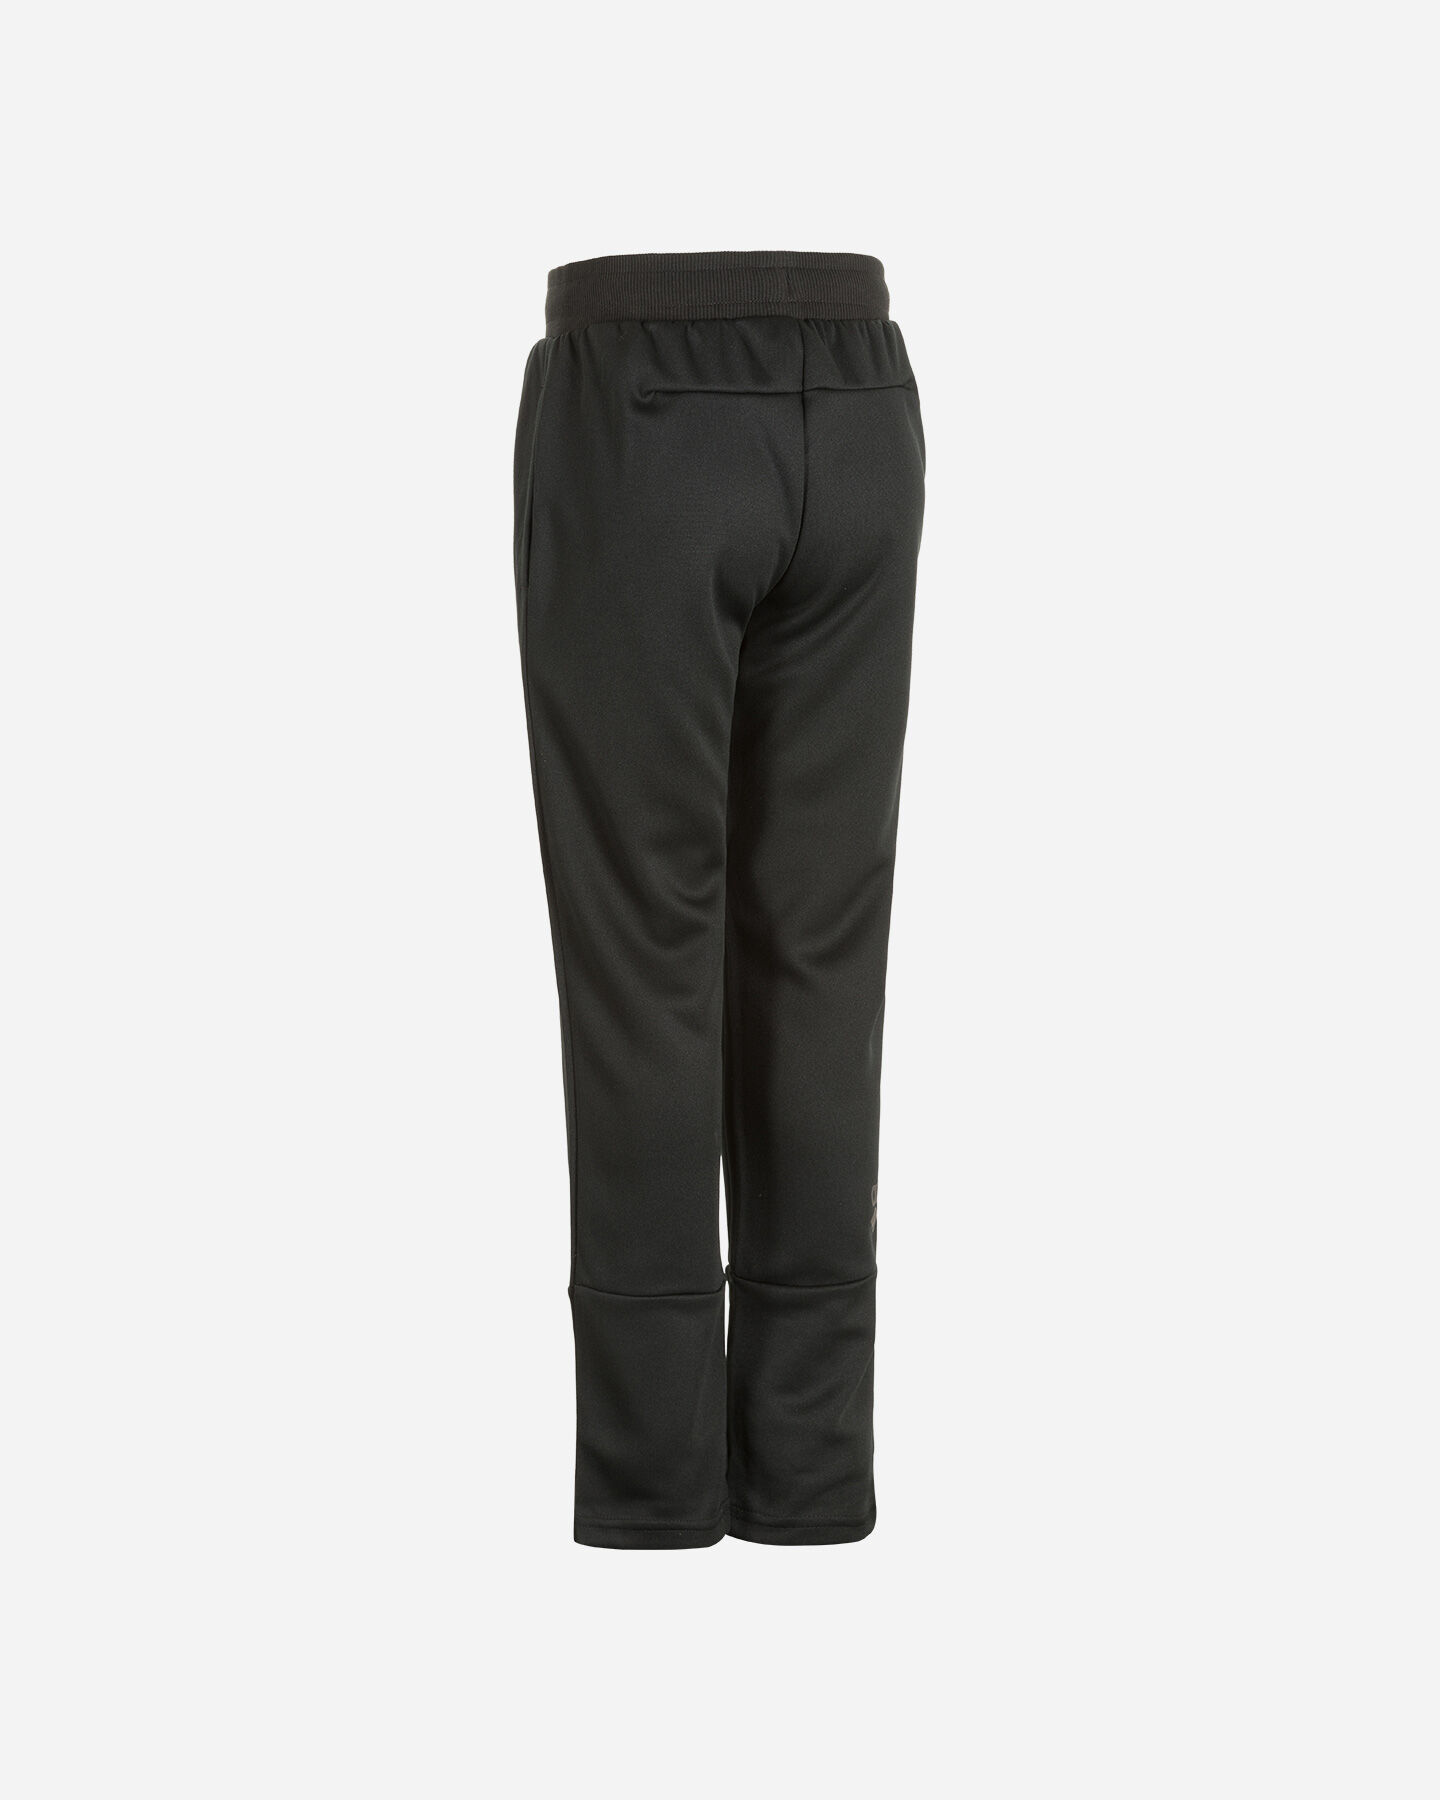  Pantalone ARENA BASIC JR S4094201|050|6A scatto 1